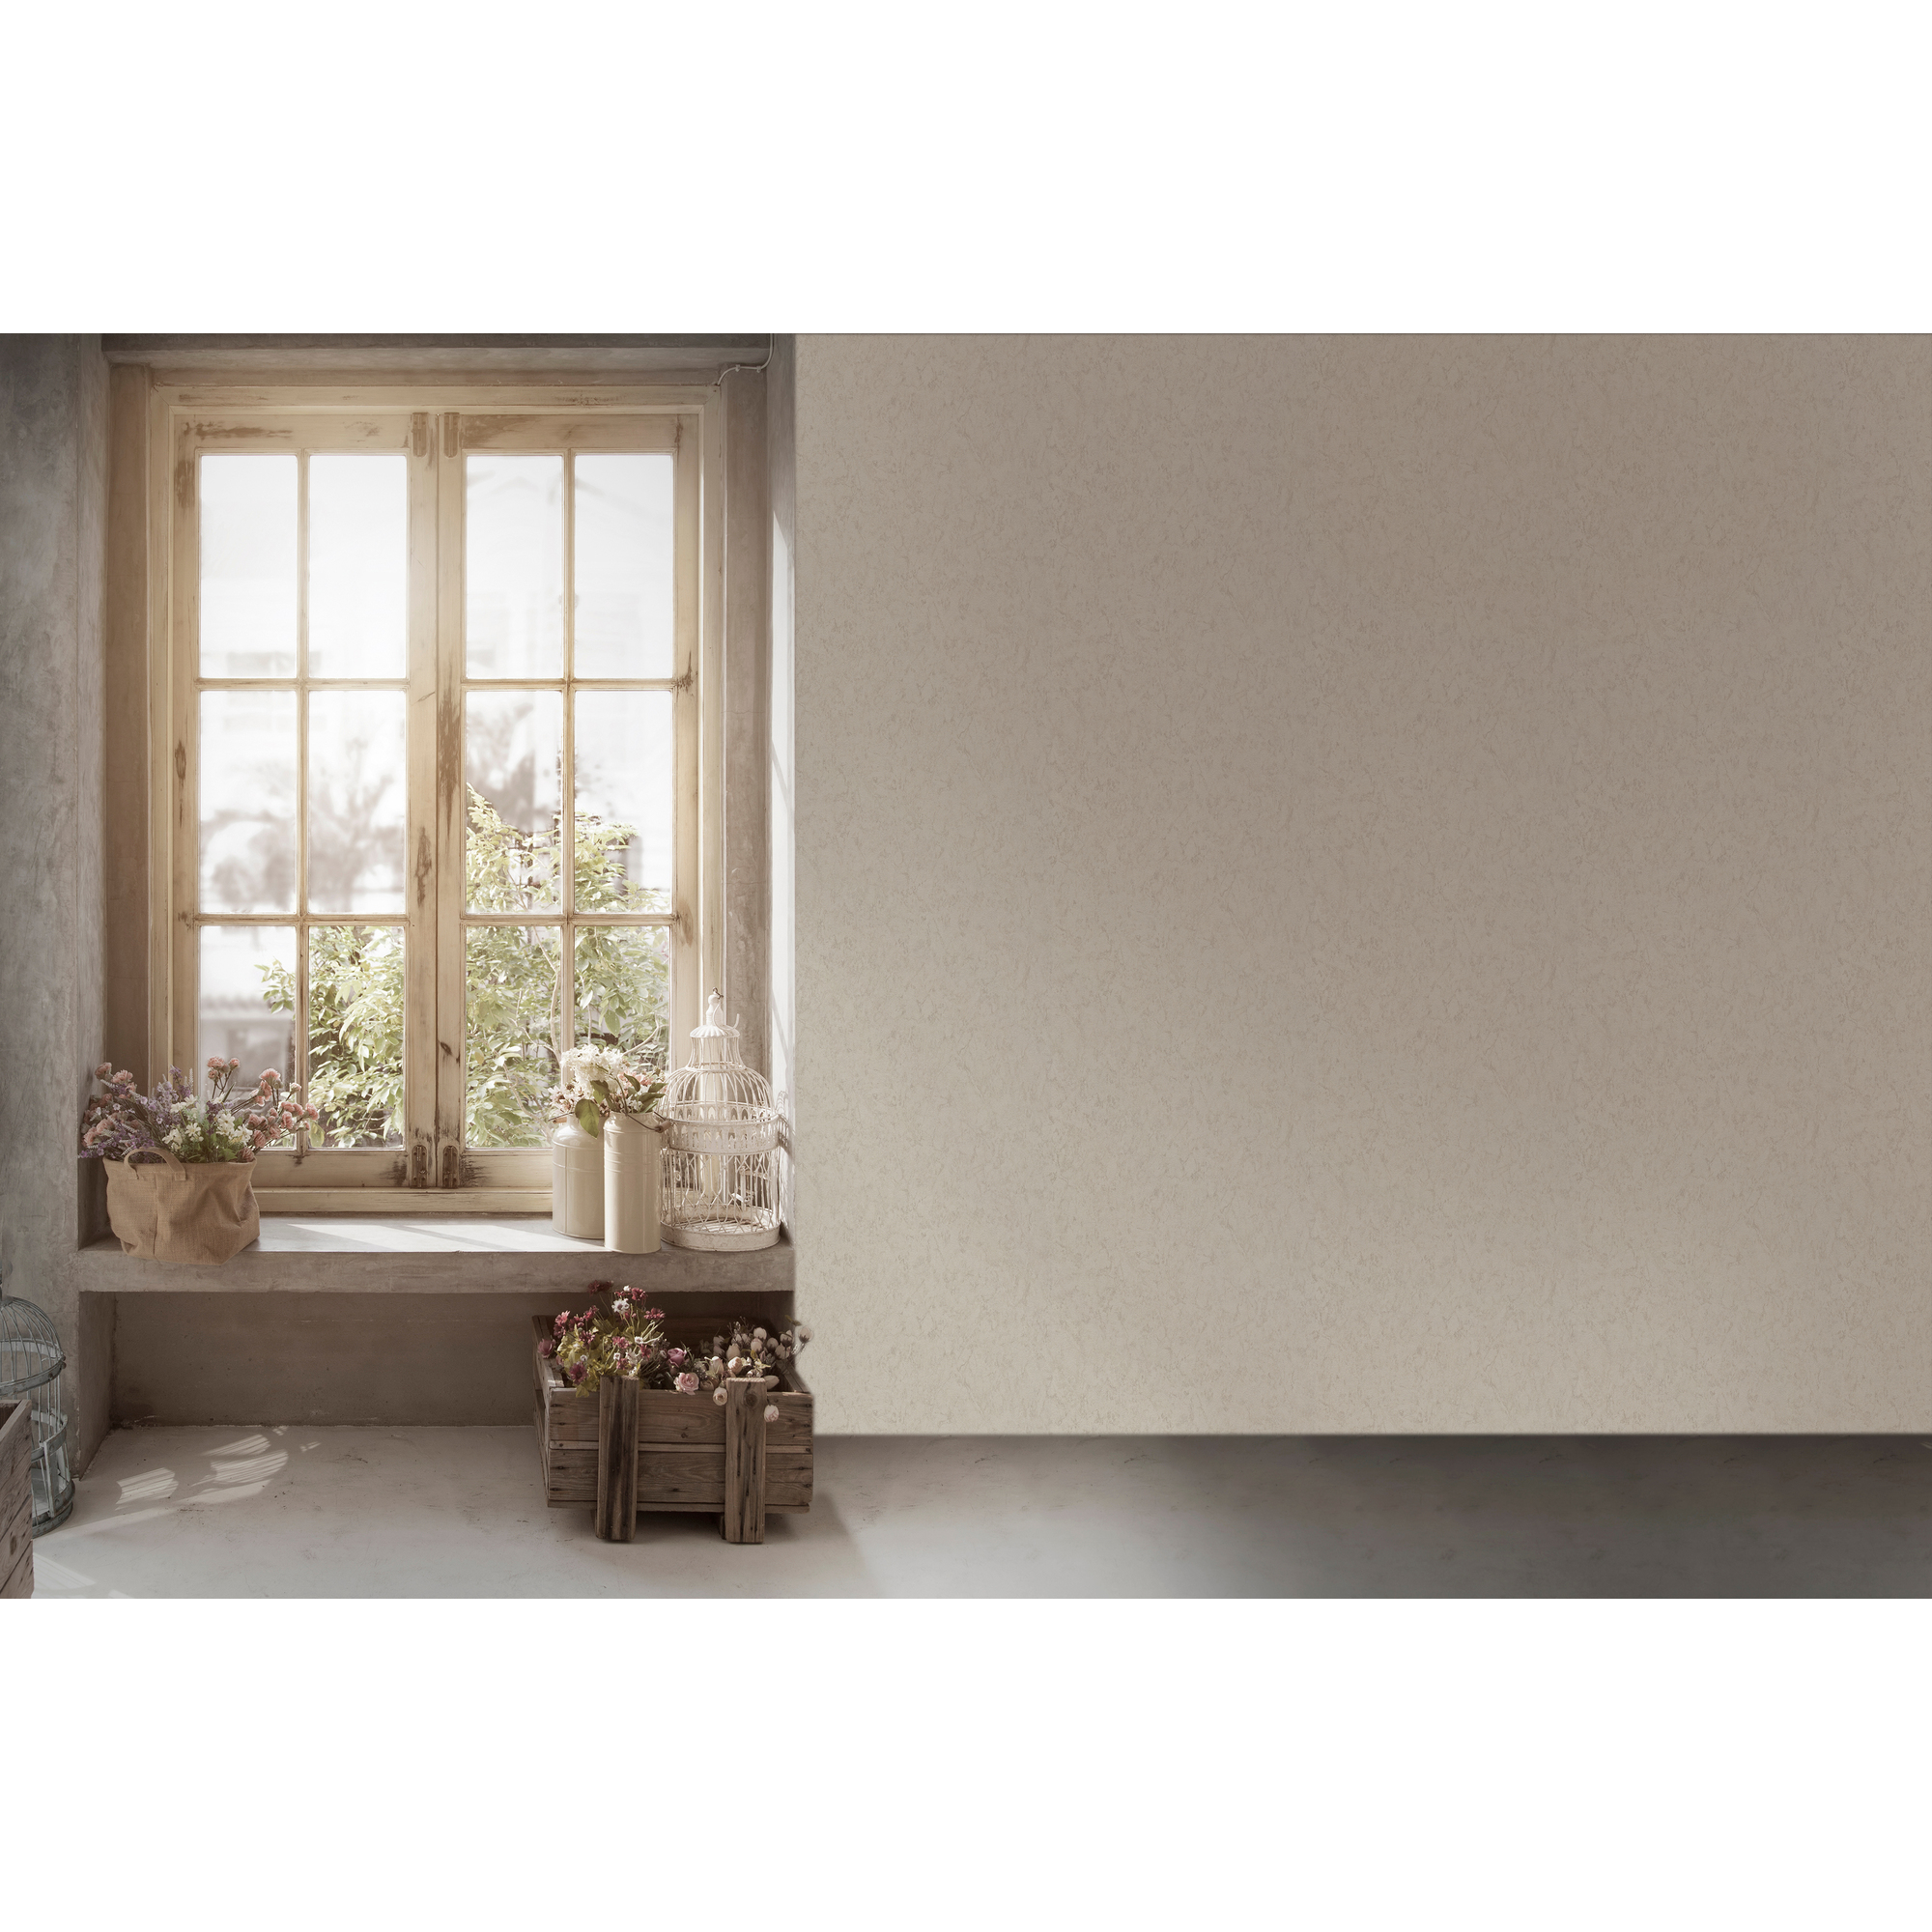 Vliestapete 'My Home. My Spa.' Betonoptik Uni weiß/grau 10,05 x 0,53 m + product picture